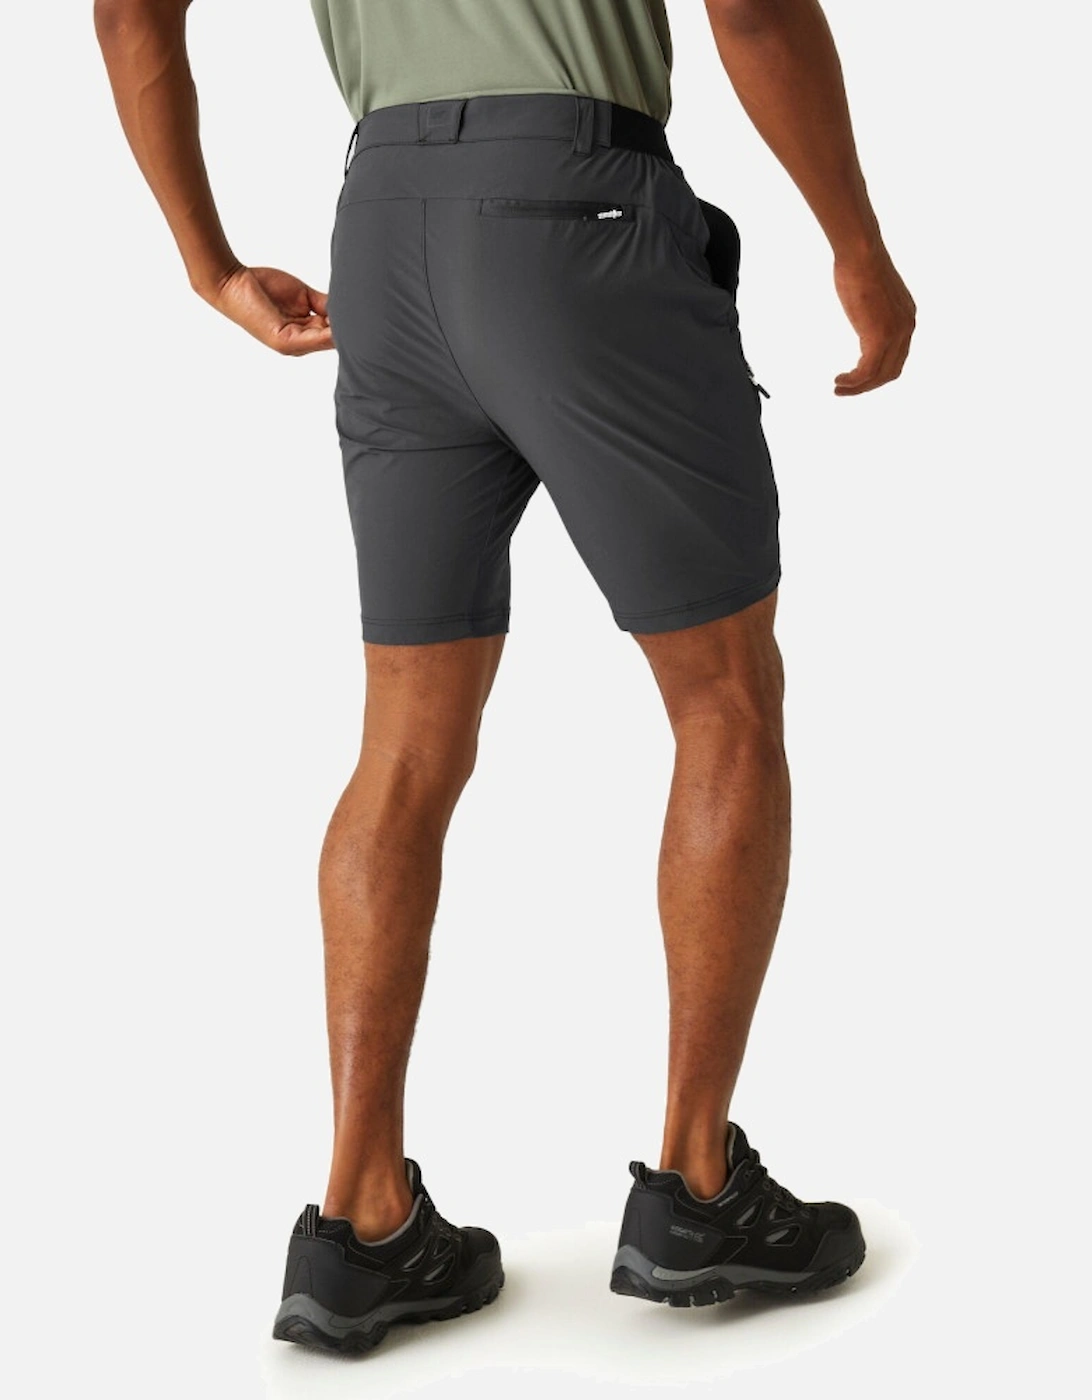 Mens Travel Lightweight Packaway Walking Shorts